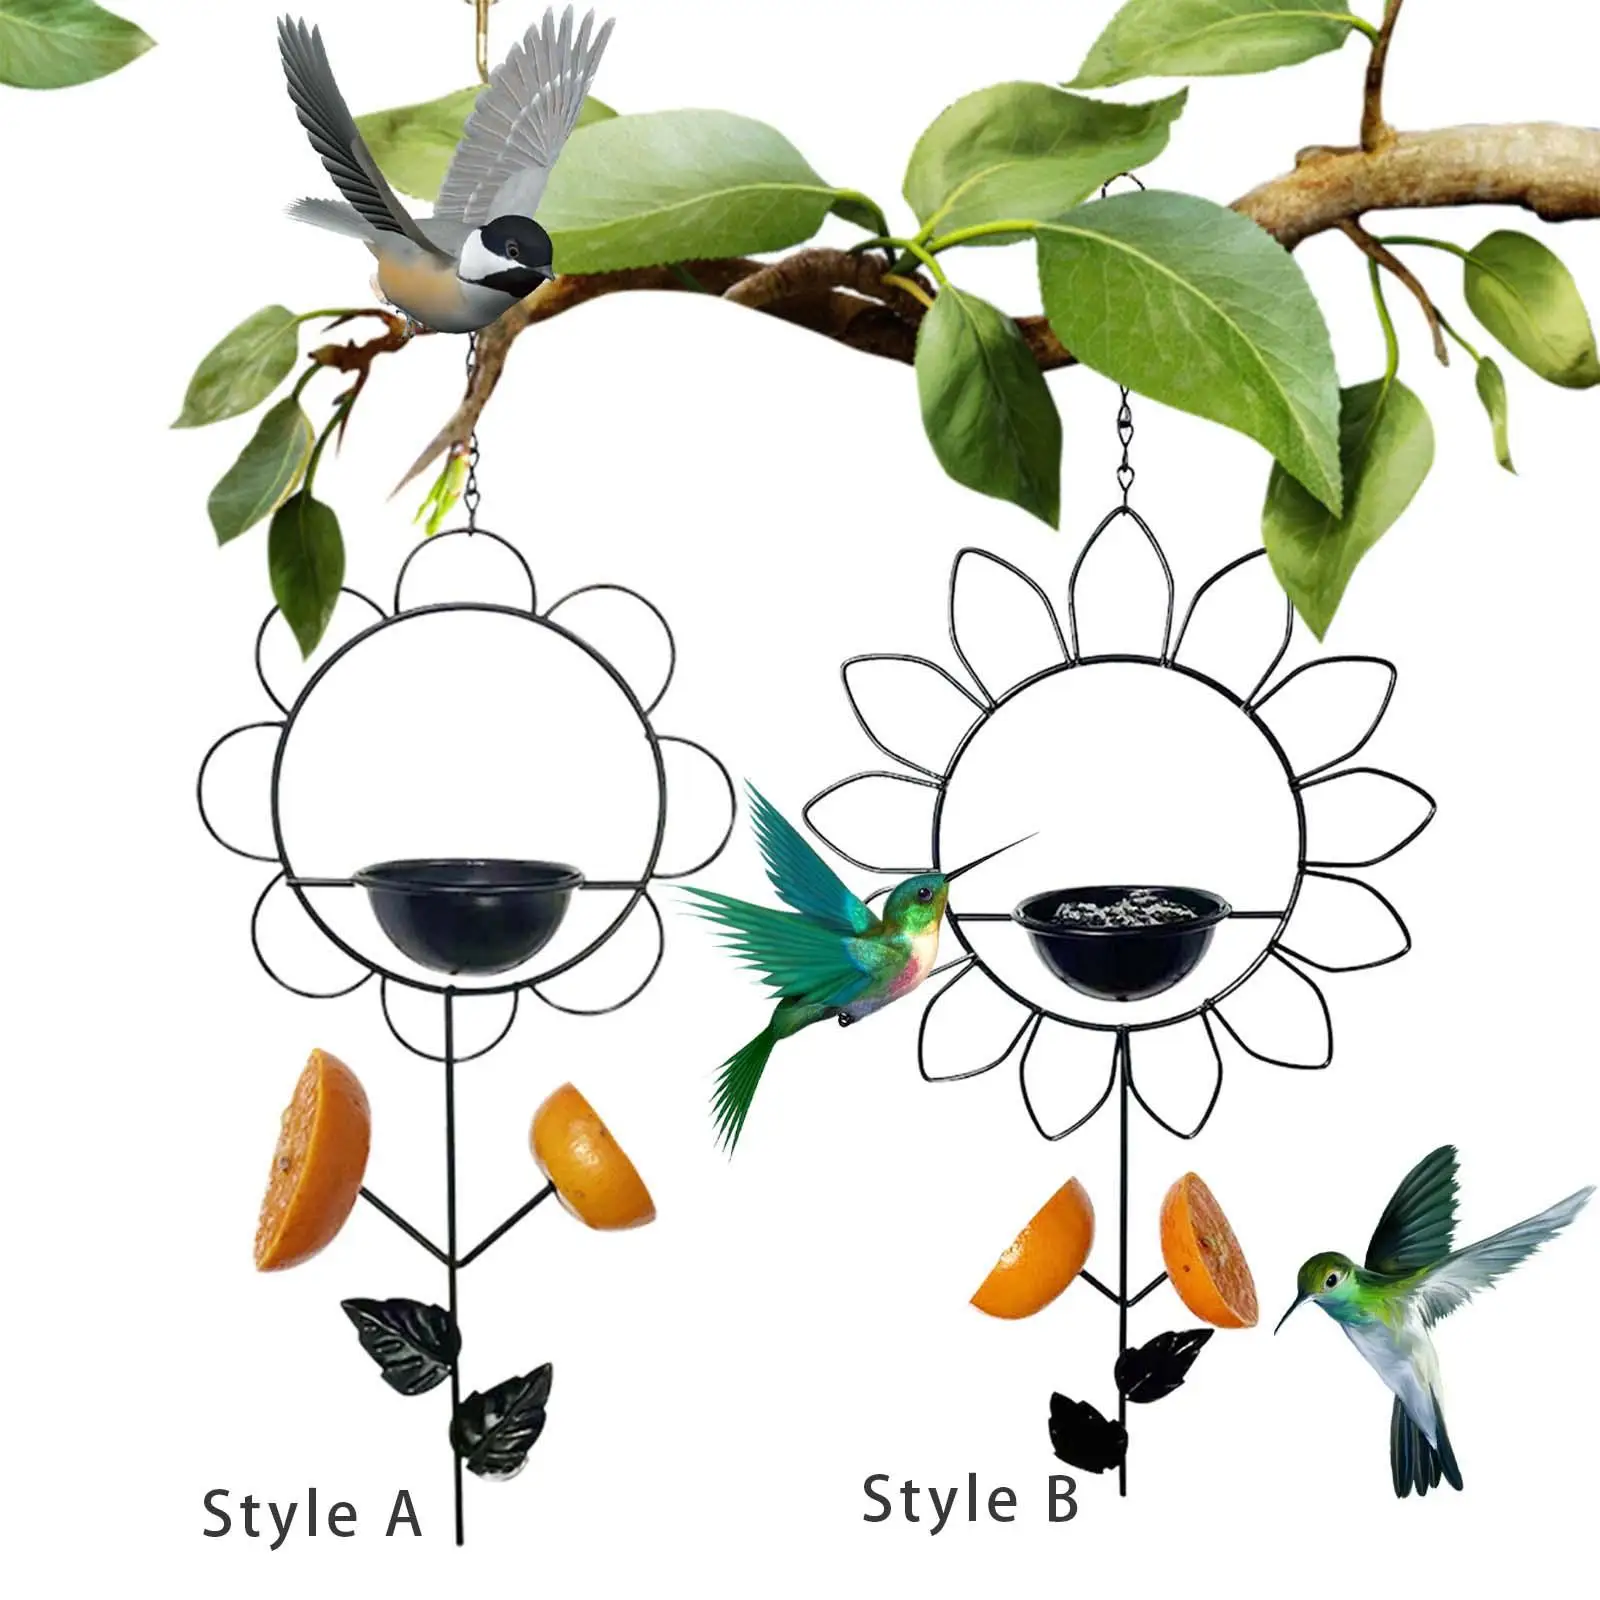 Hanging Bird Feeder Decorative Pet Supplies Hummingbirds Feeder for Yard, Patio, Outside, Attracting Birds Birds Lovers Gifts